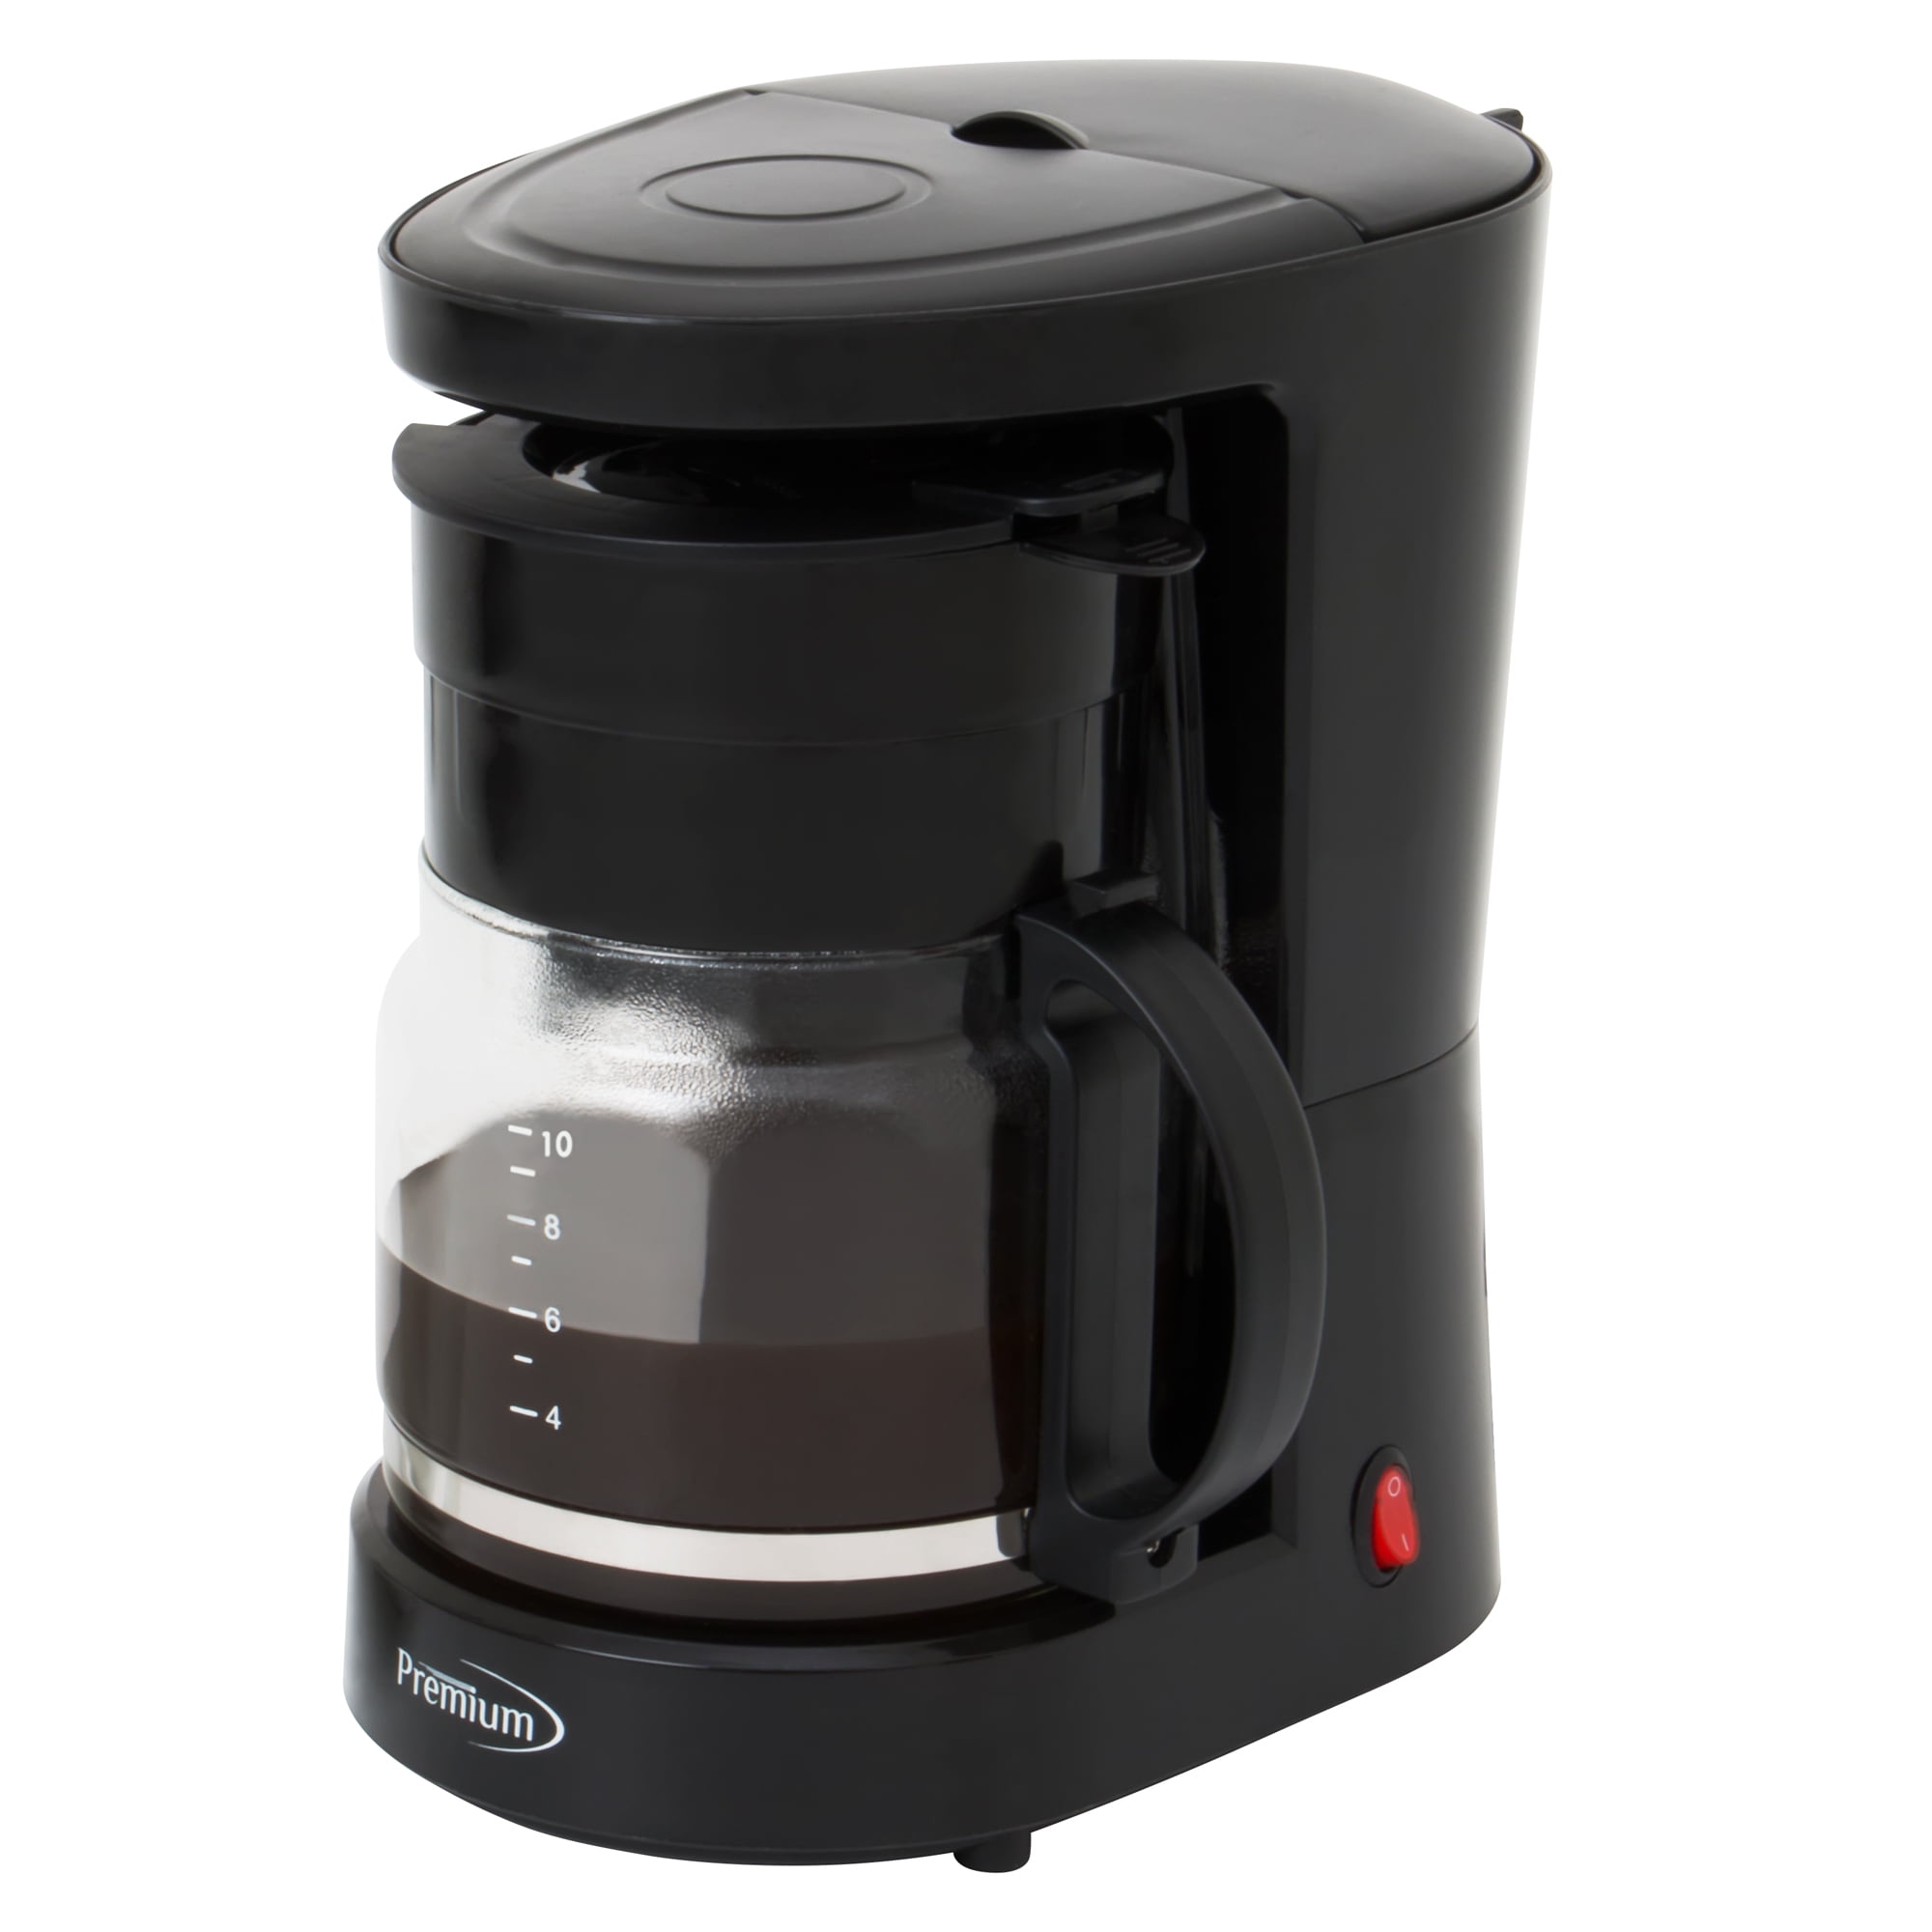 CRUX Artisan Series EasyBrew Coffee Maker - Grey 1 ct